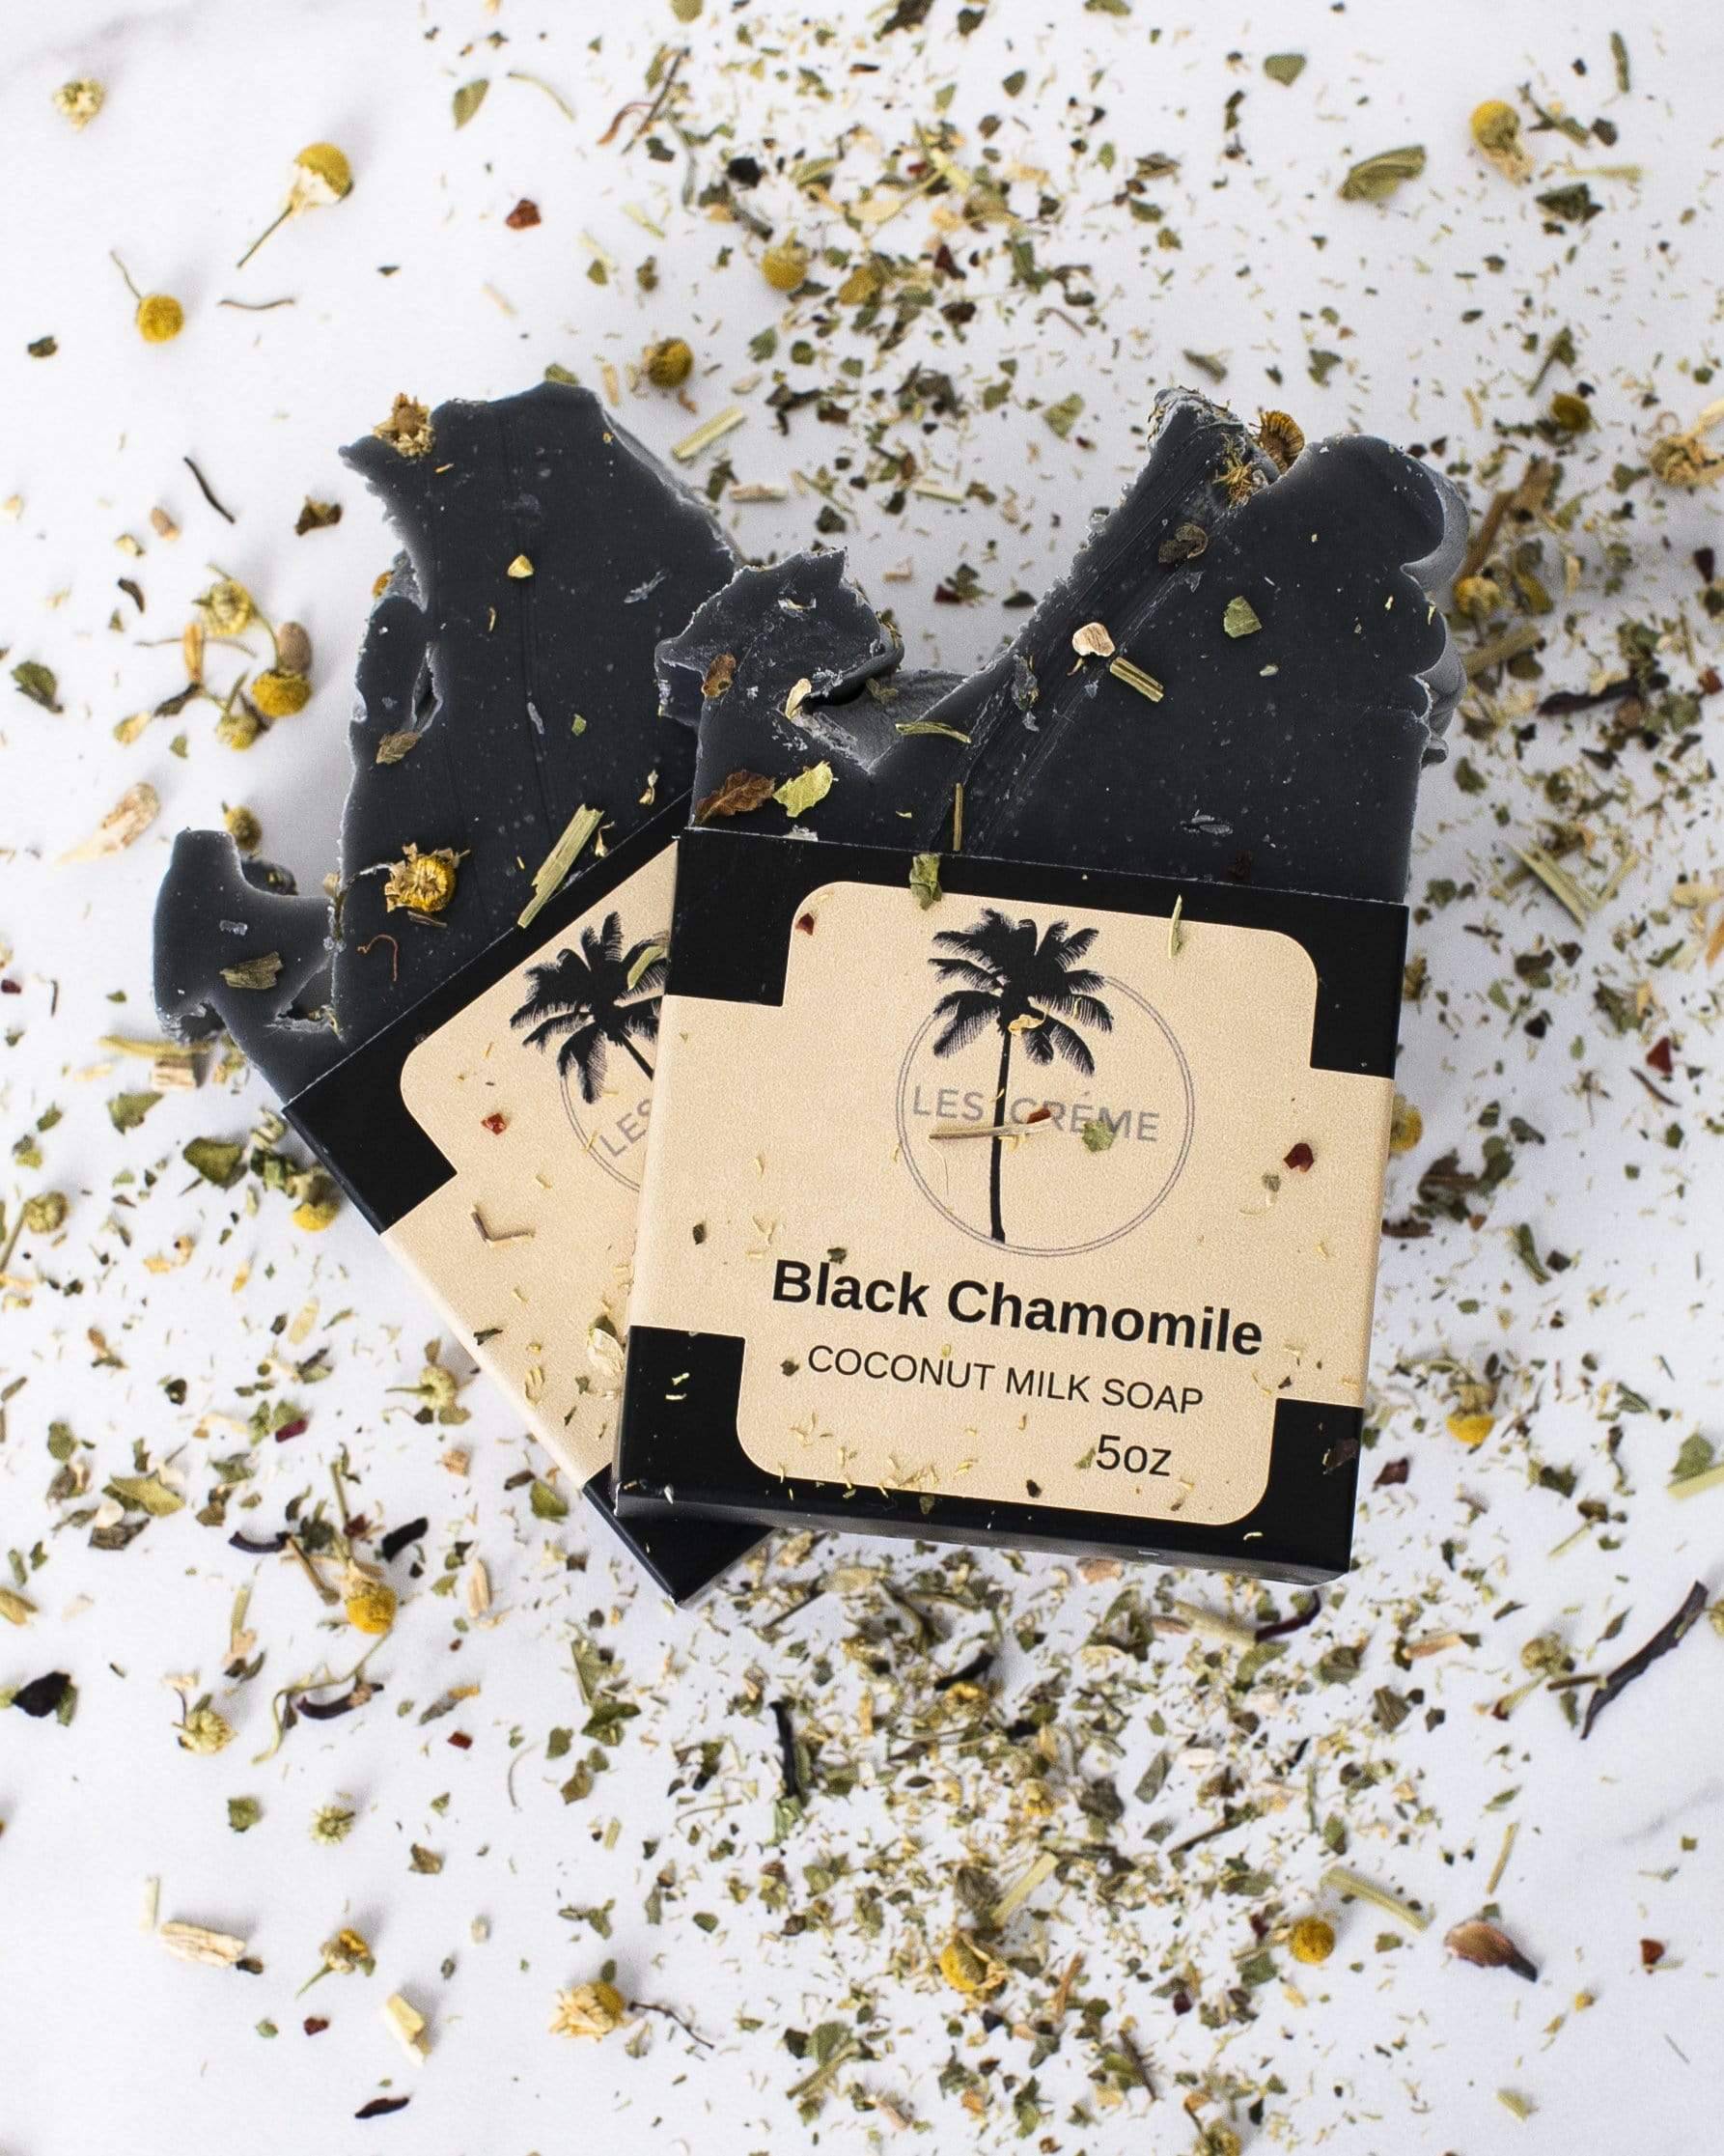  Black Chamomile Coconut Milk Soap Les Creme Perfumarie